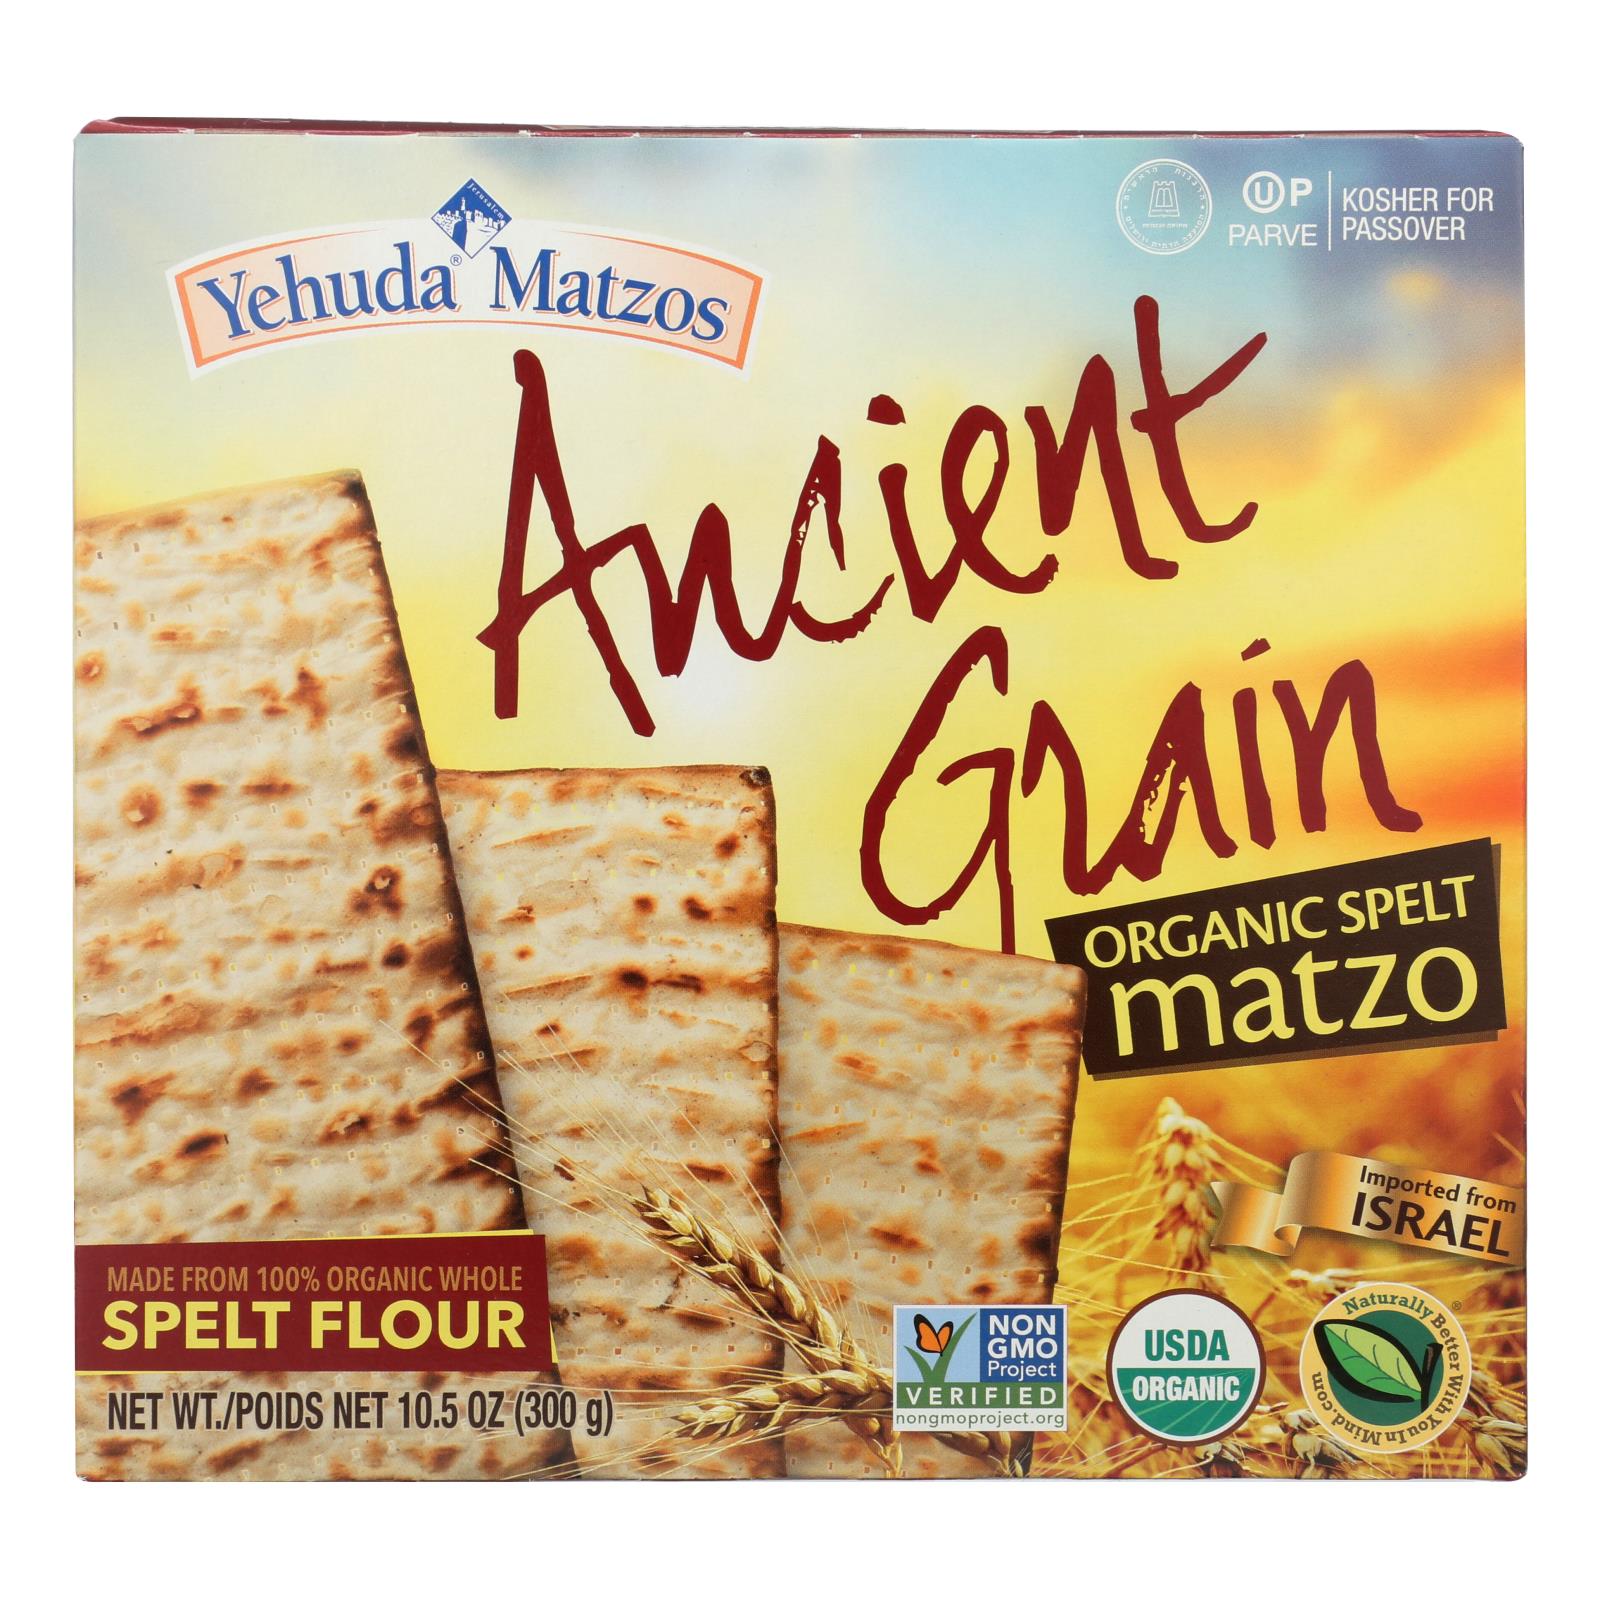 Yehuda Spelt Matzo - Organic - Gluten Free - Ancient Grains - Case of 24 - 10.5 oz